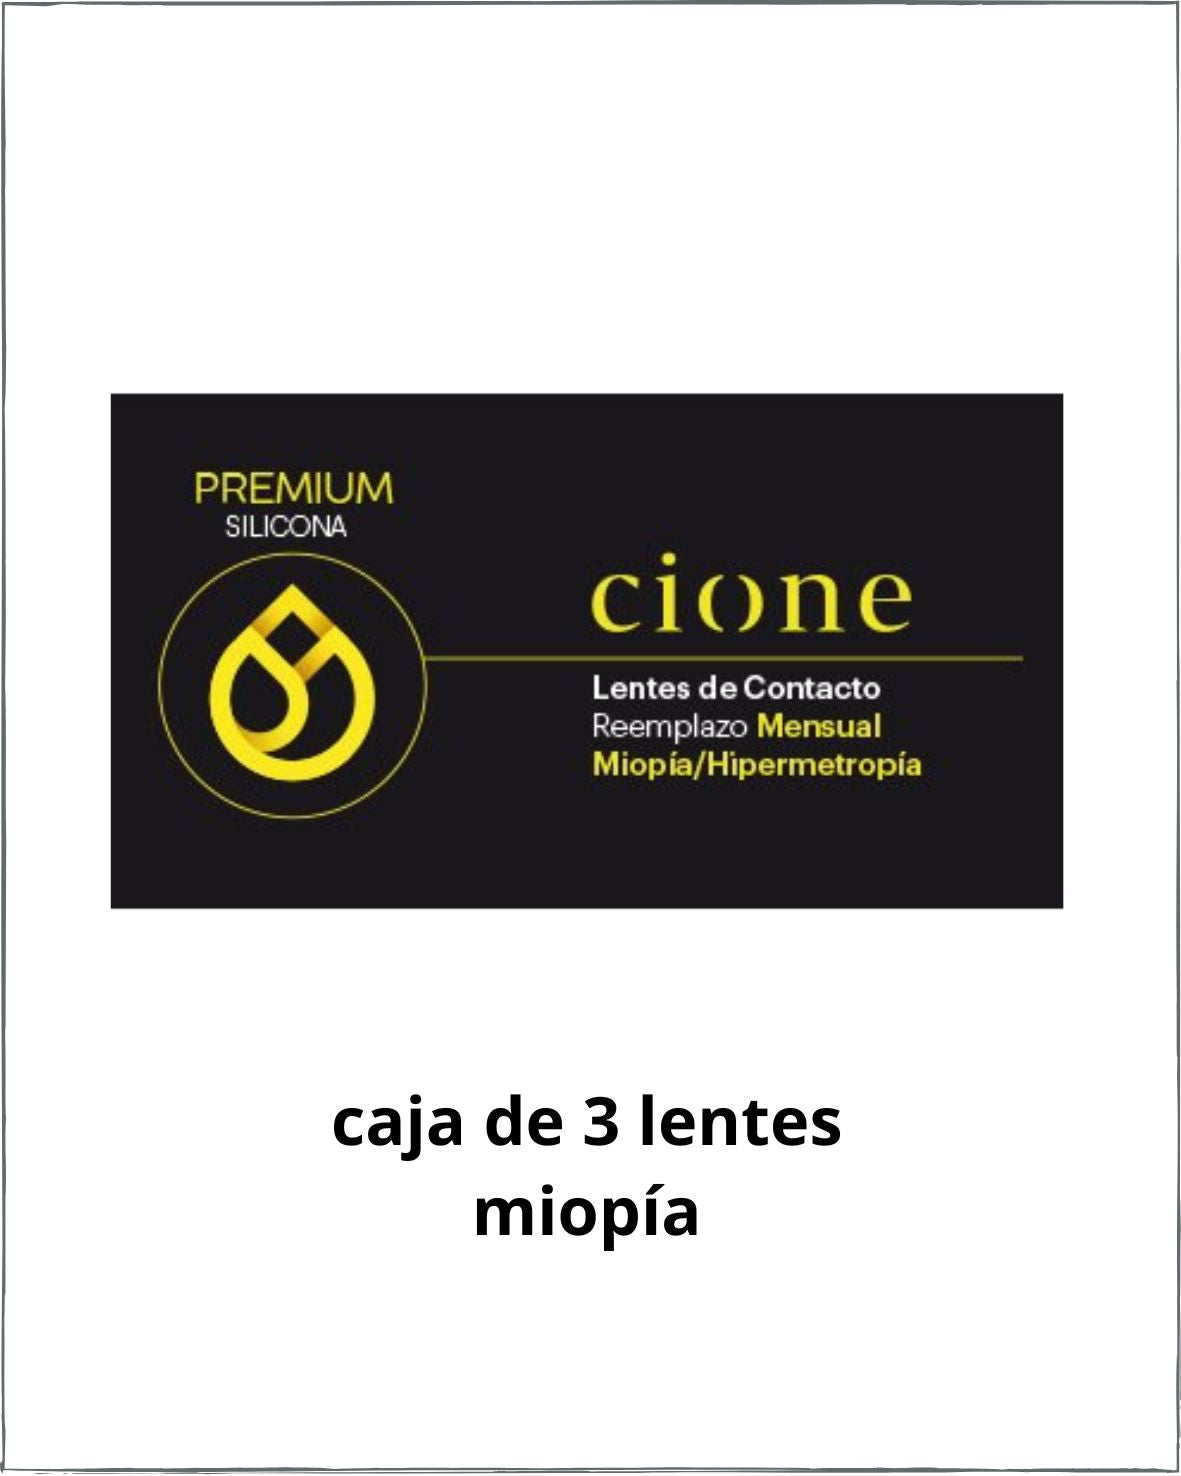 Lente de contacto Mensual Cione Premium Silicona (formato 3 lentes)